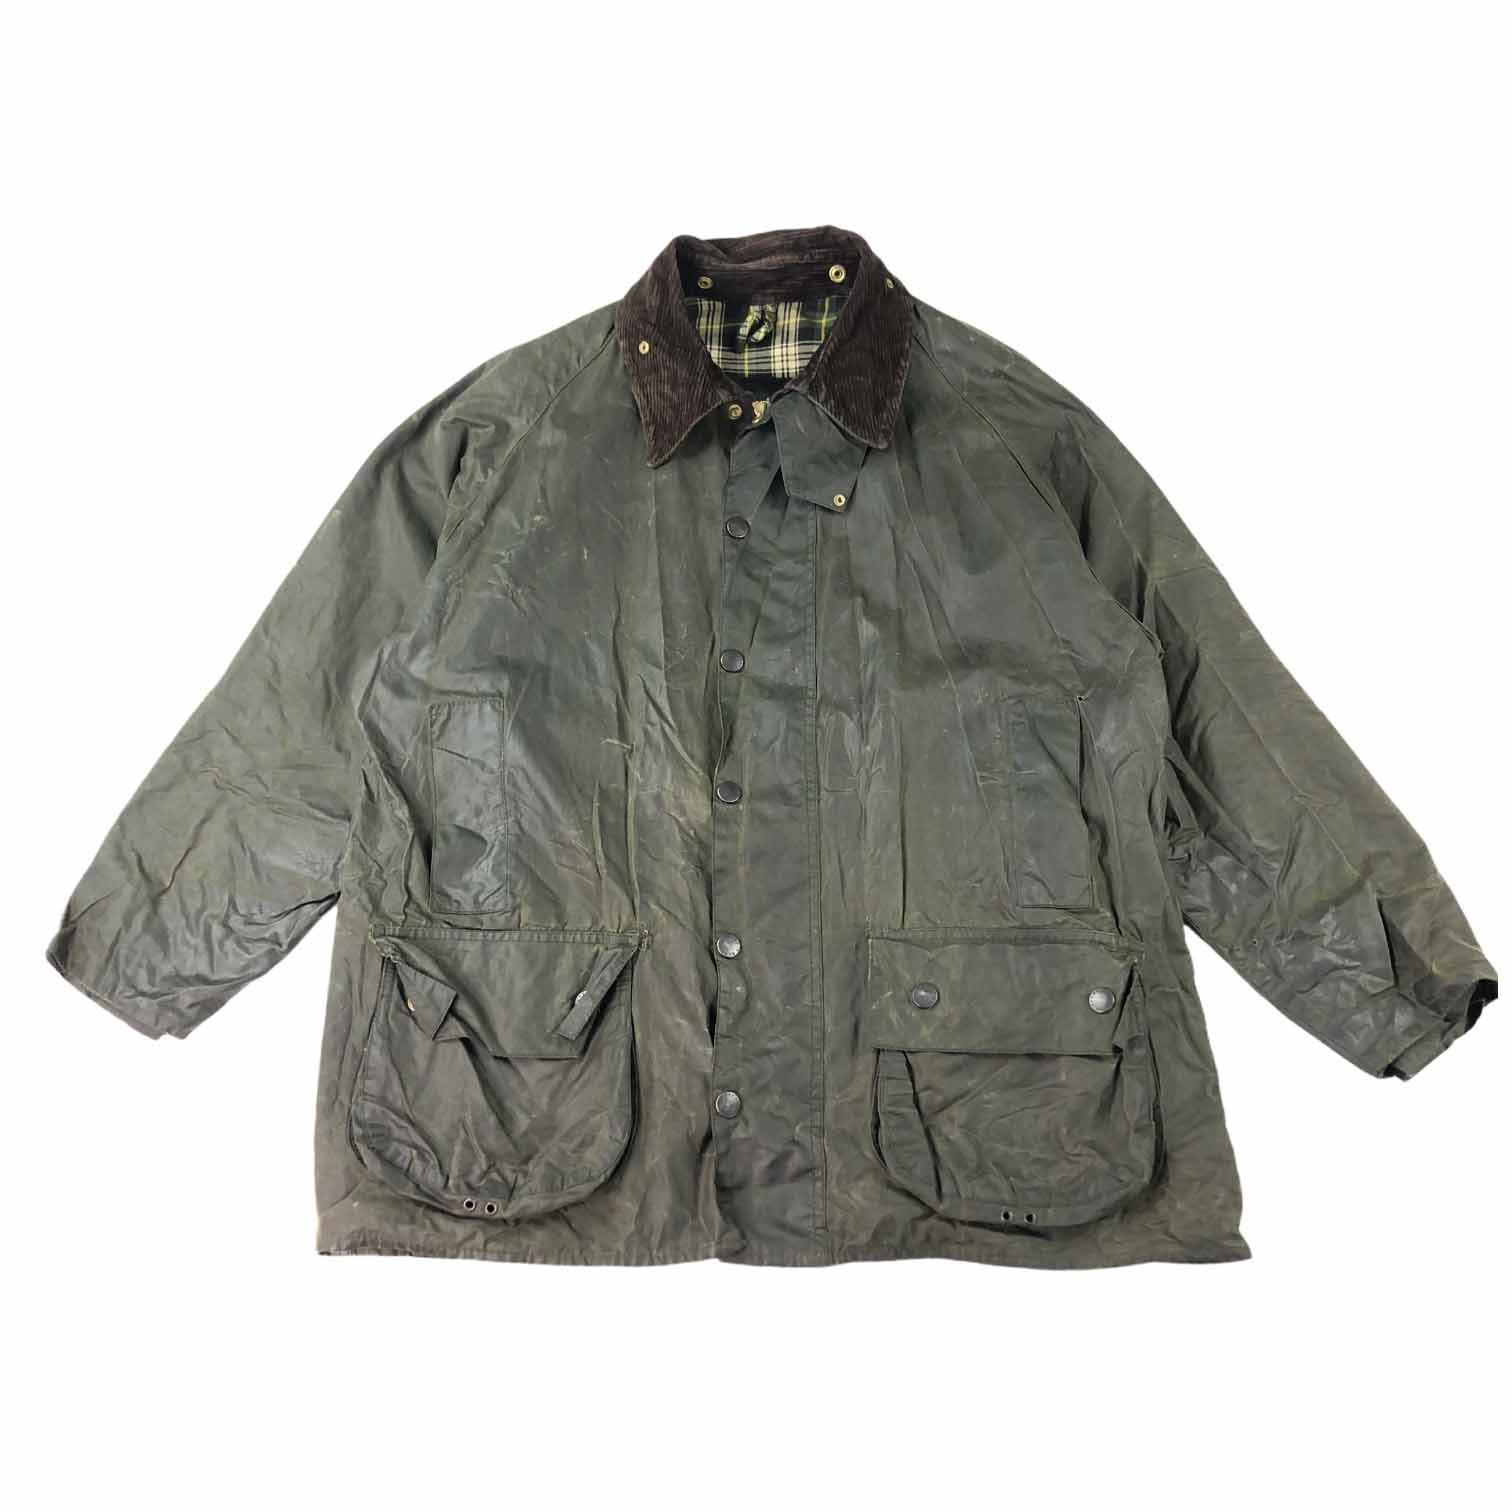 [Barbour] Coated Safari Jacket - Size 46(XL)